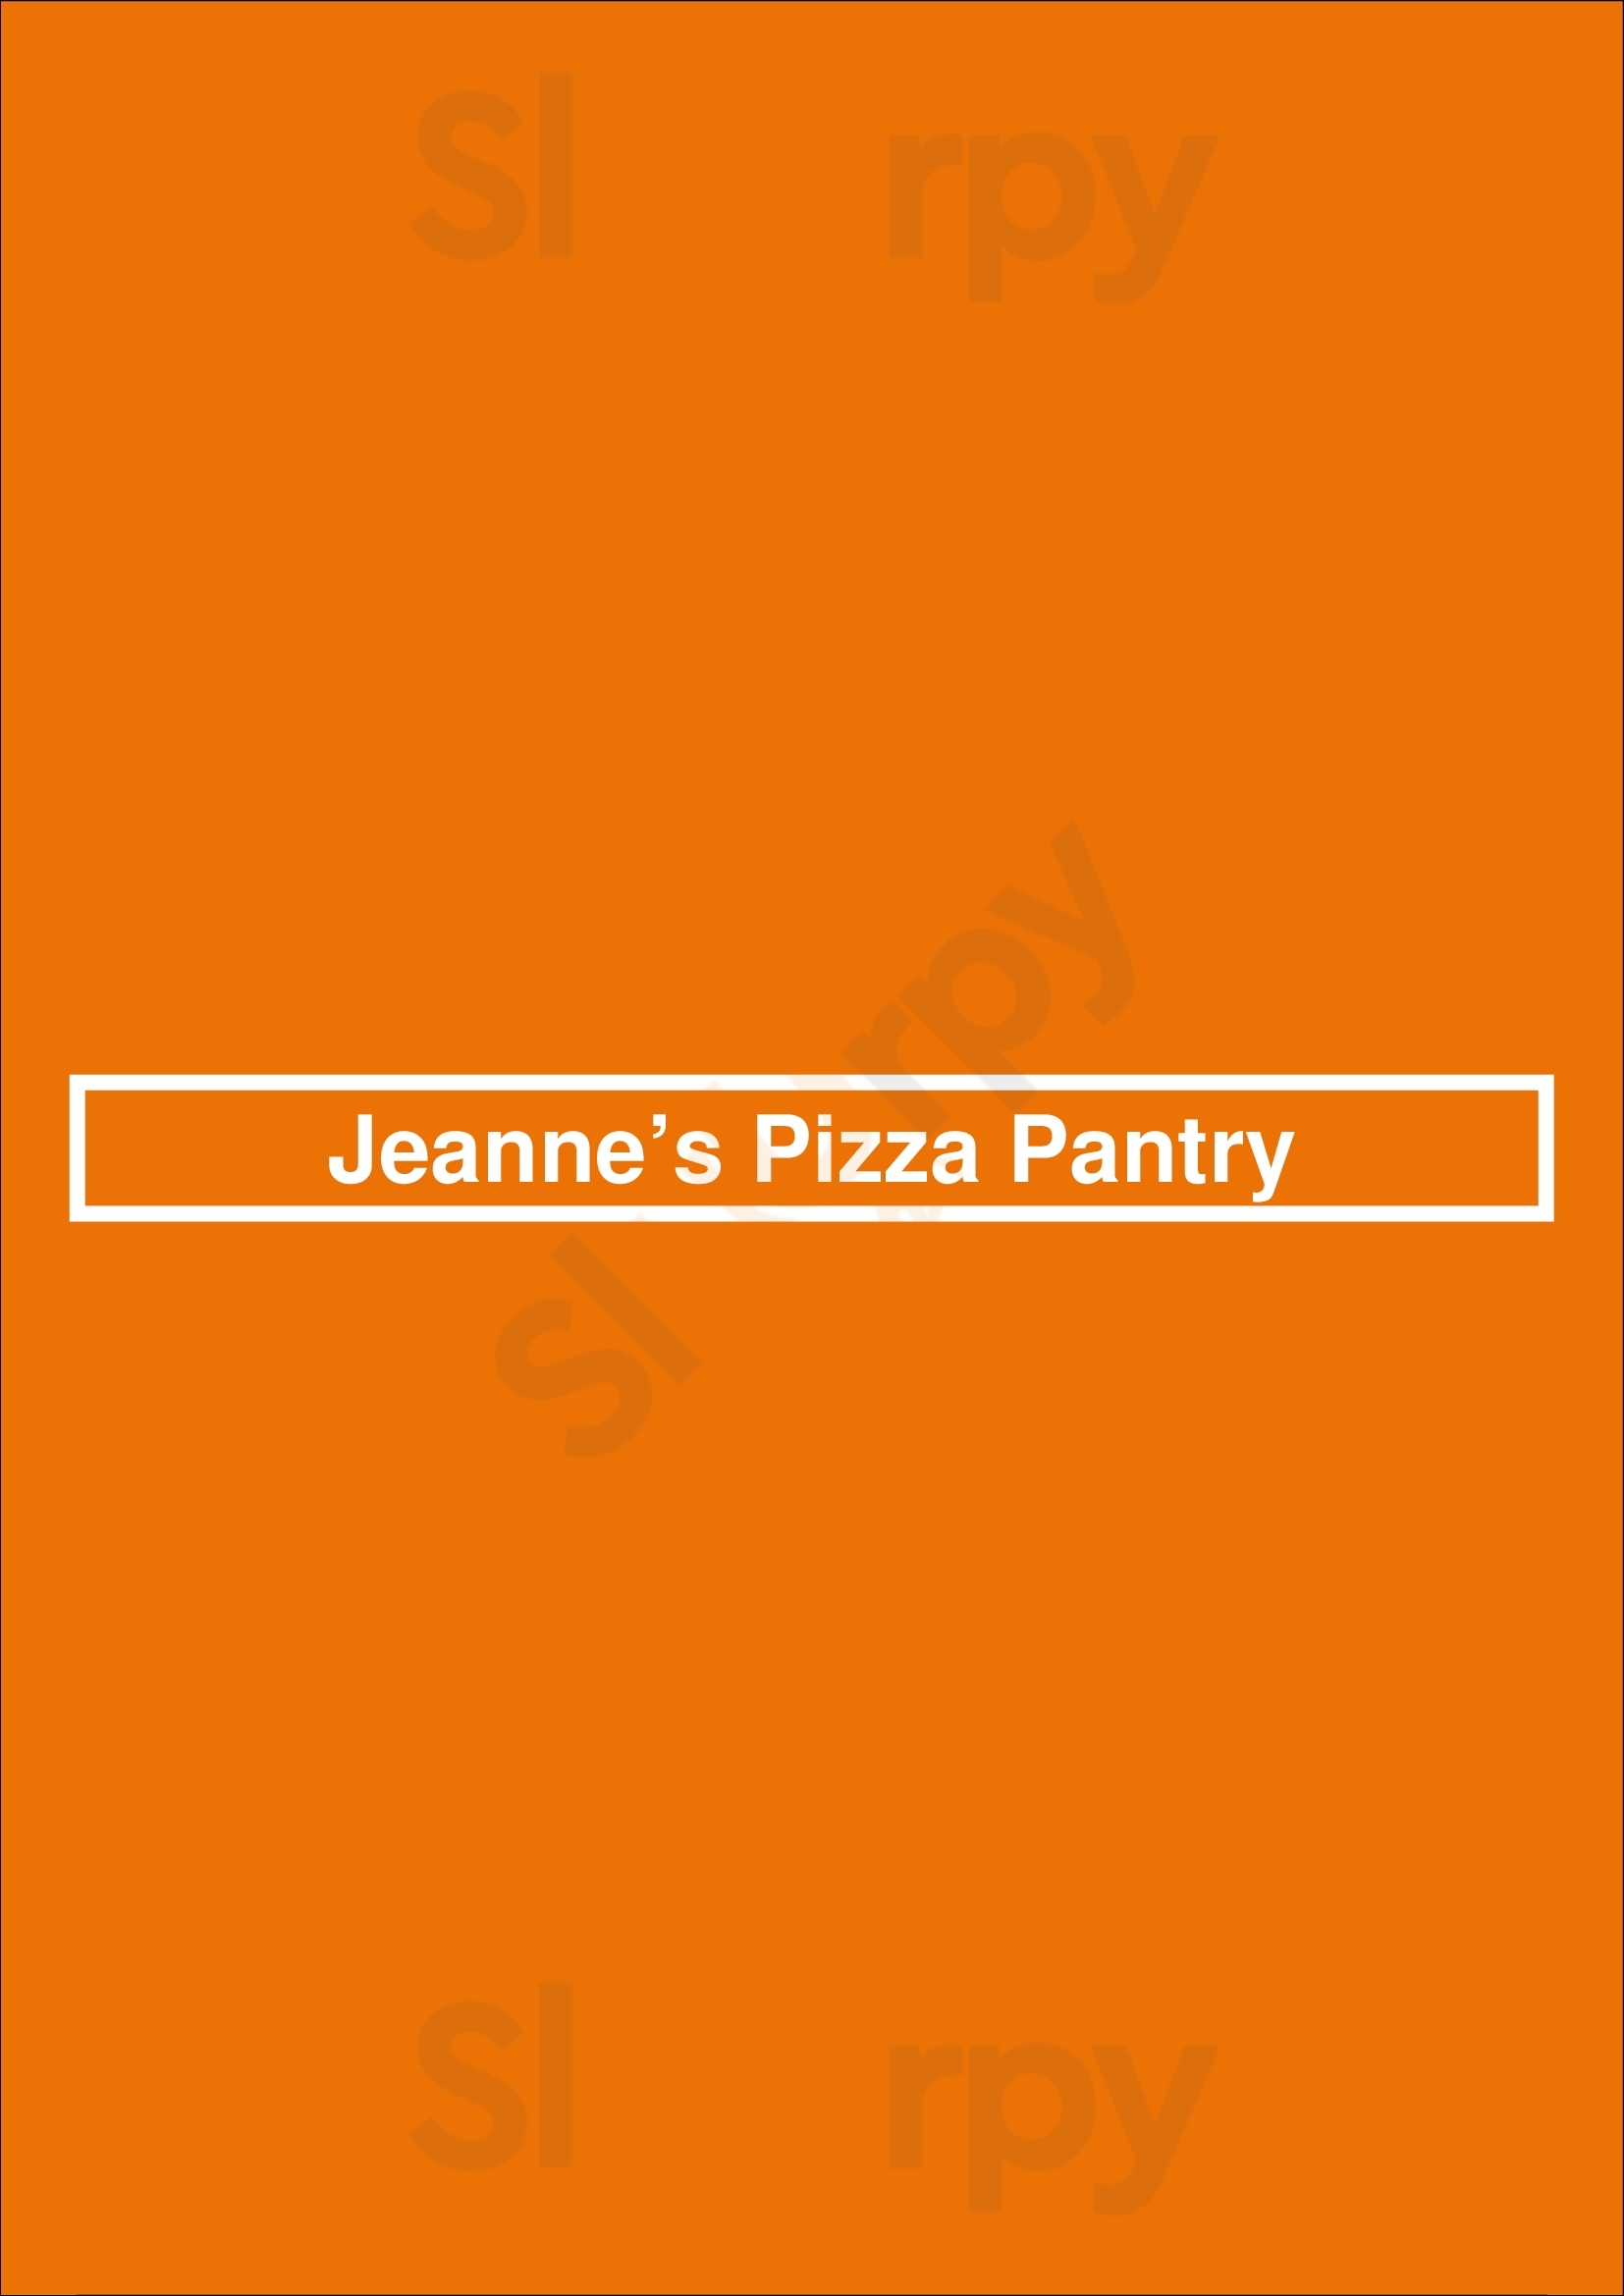 Jeanne’s Pizza Pantry Calgary Menu - 1